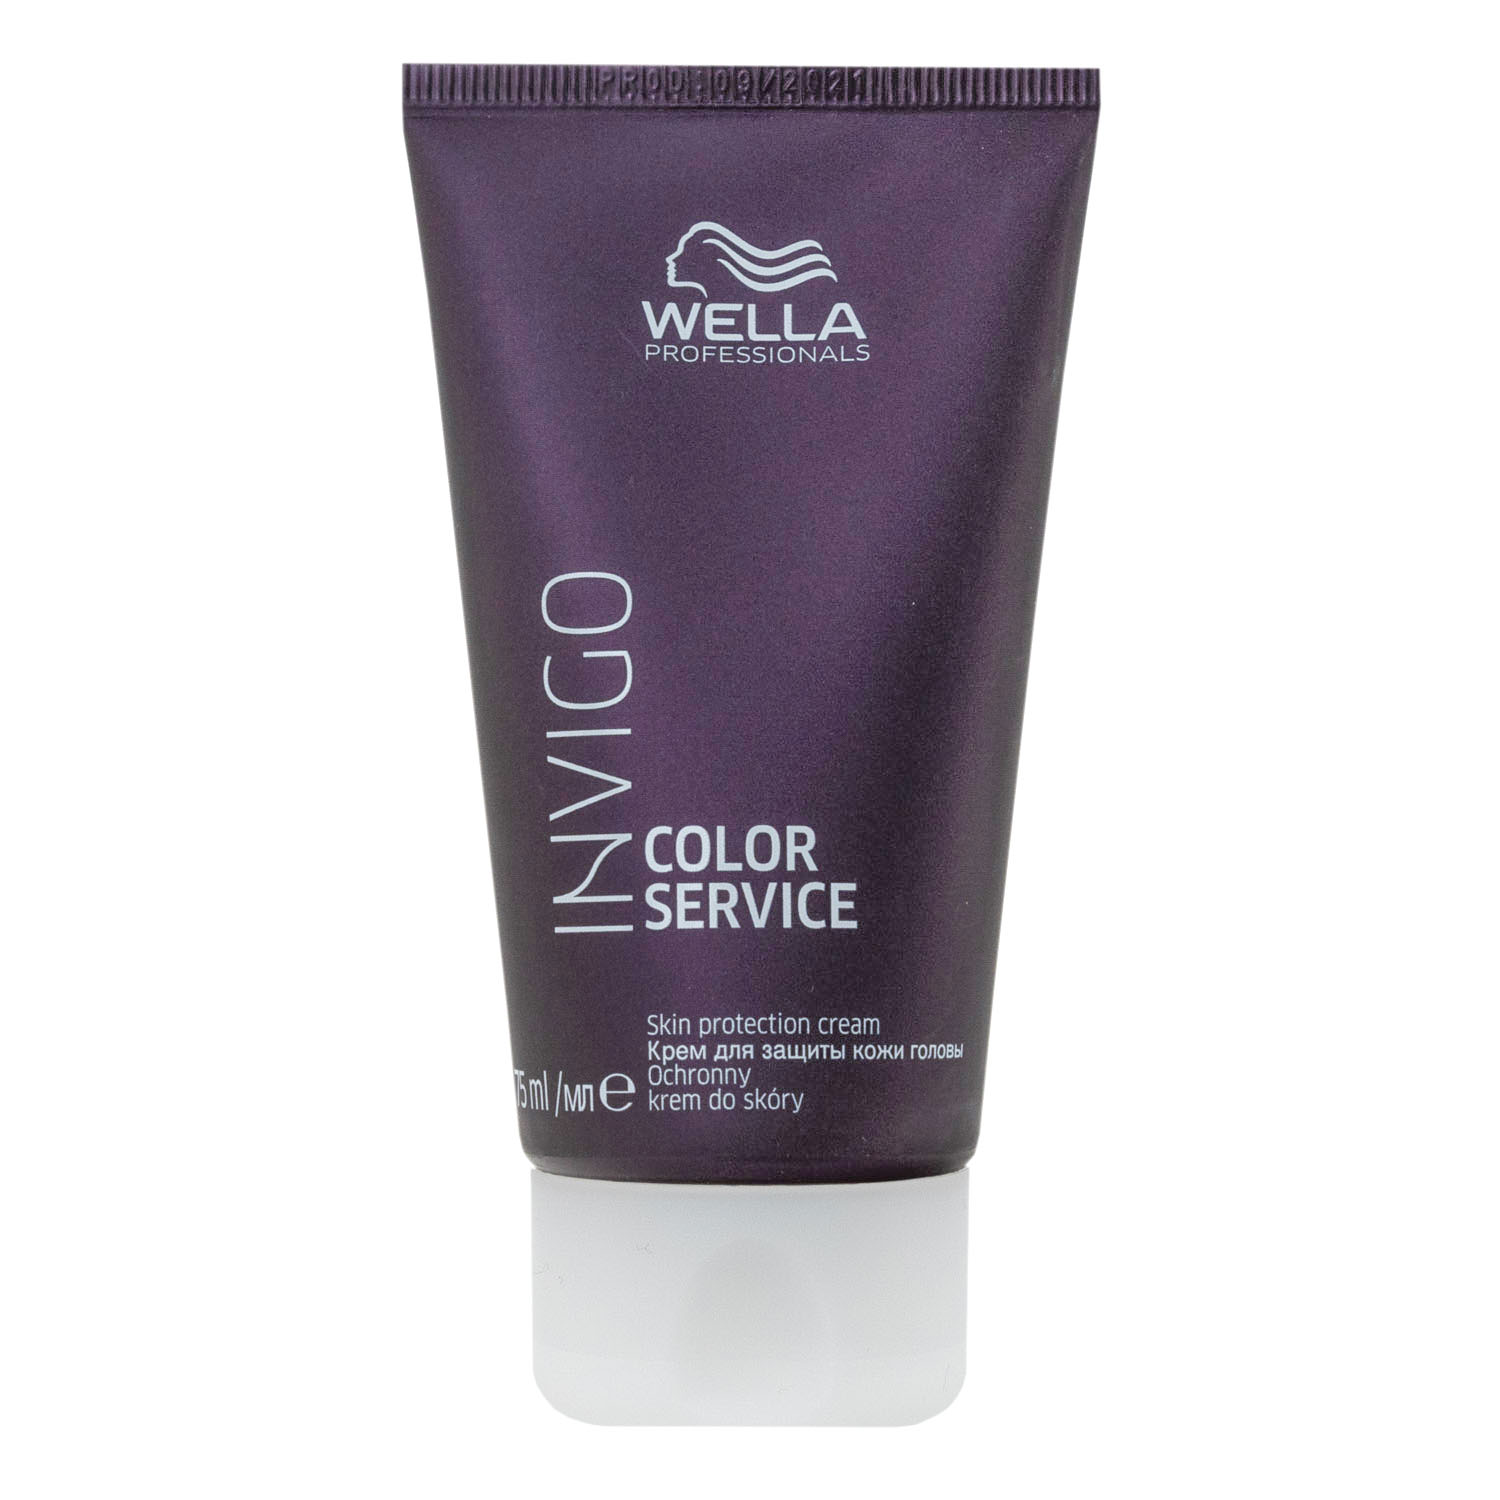 Wella Professionals Крем для защиты кожи головы, 75 мл (Wella Professionals, Окрашивание) от Socolor